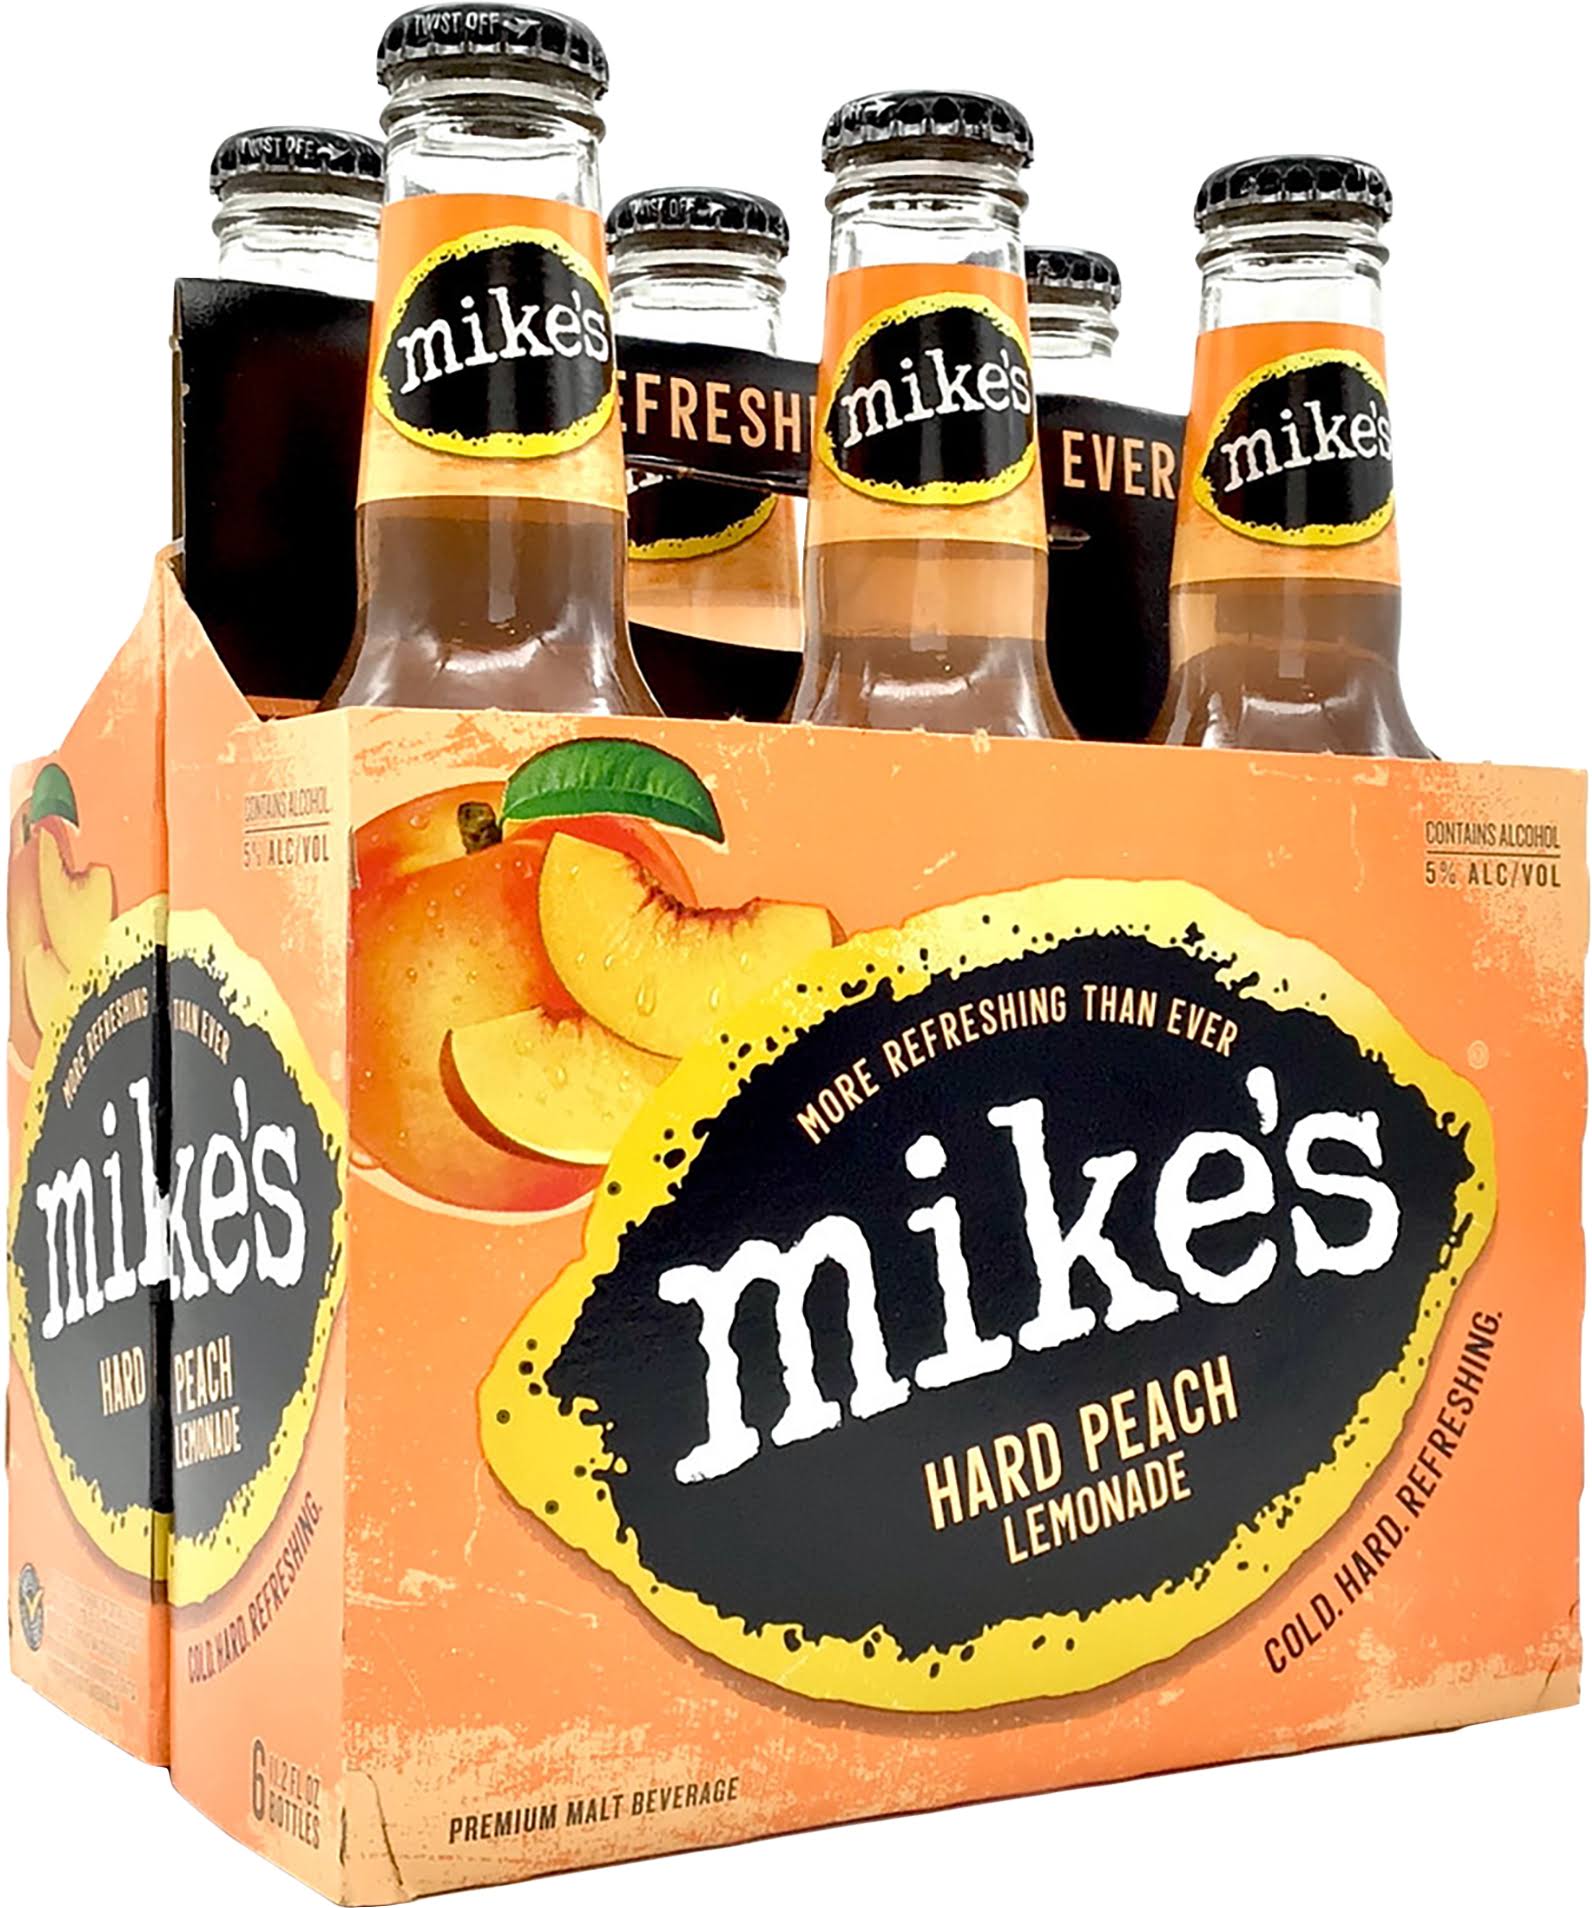 Mike's Hard Peach Lemonade - 11.2 oz, 6 pack